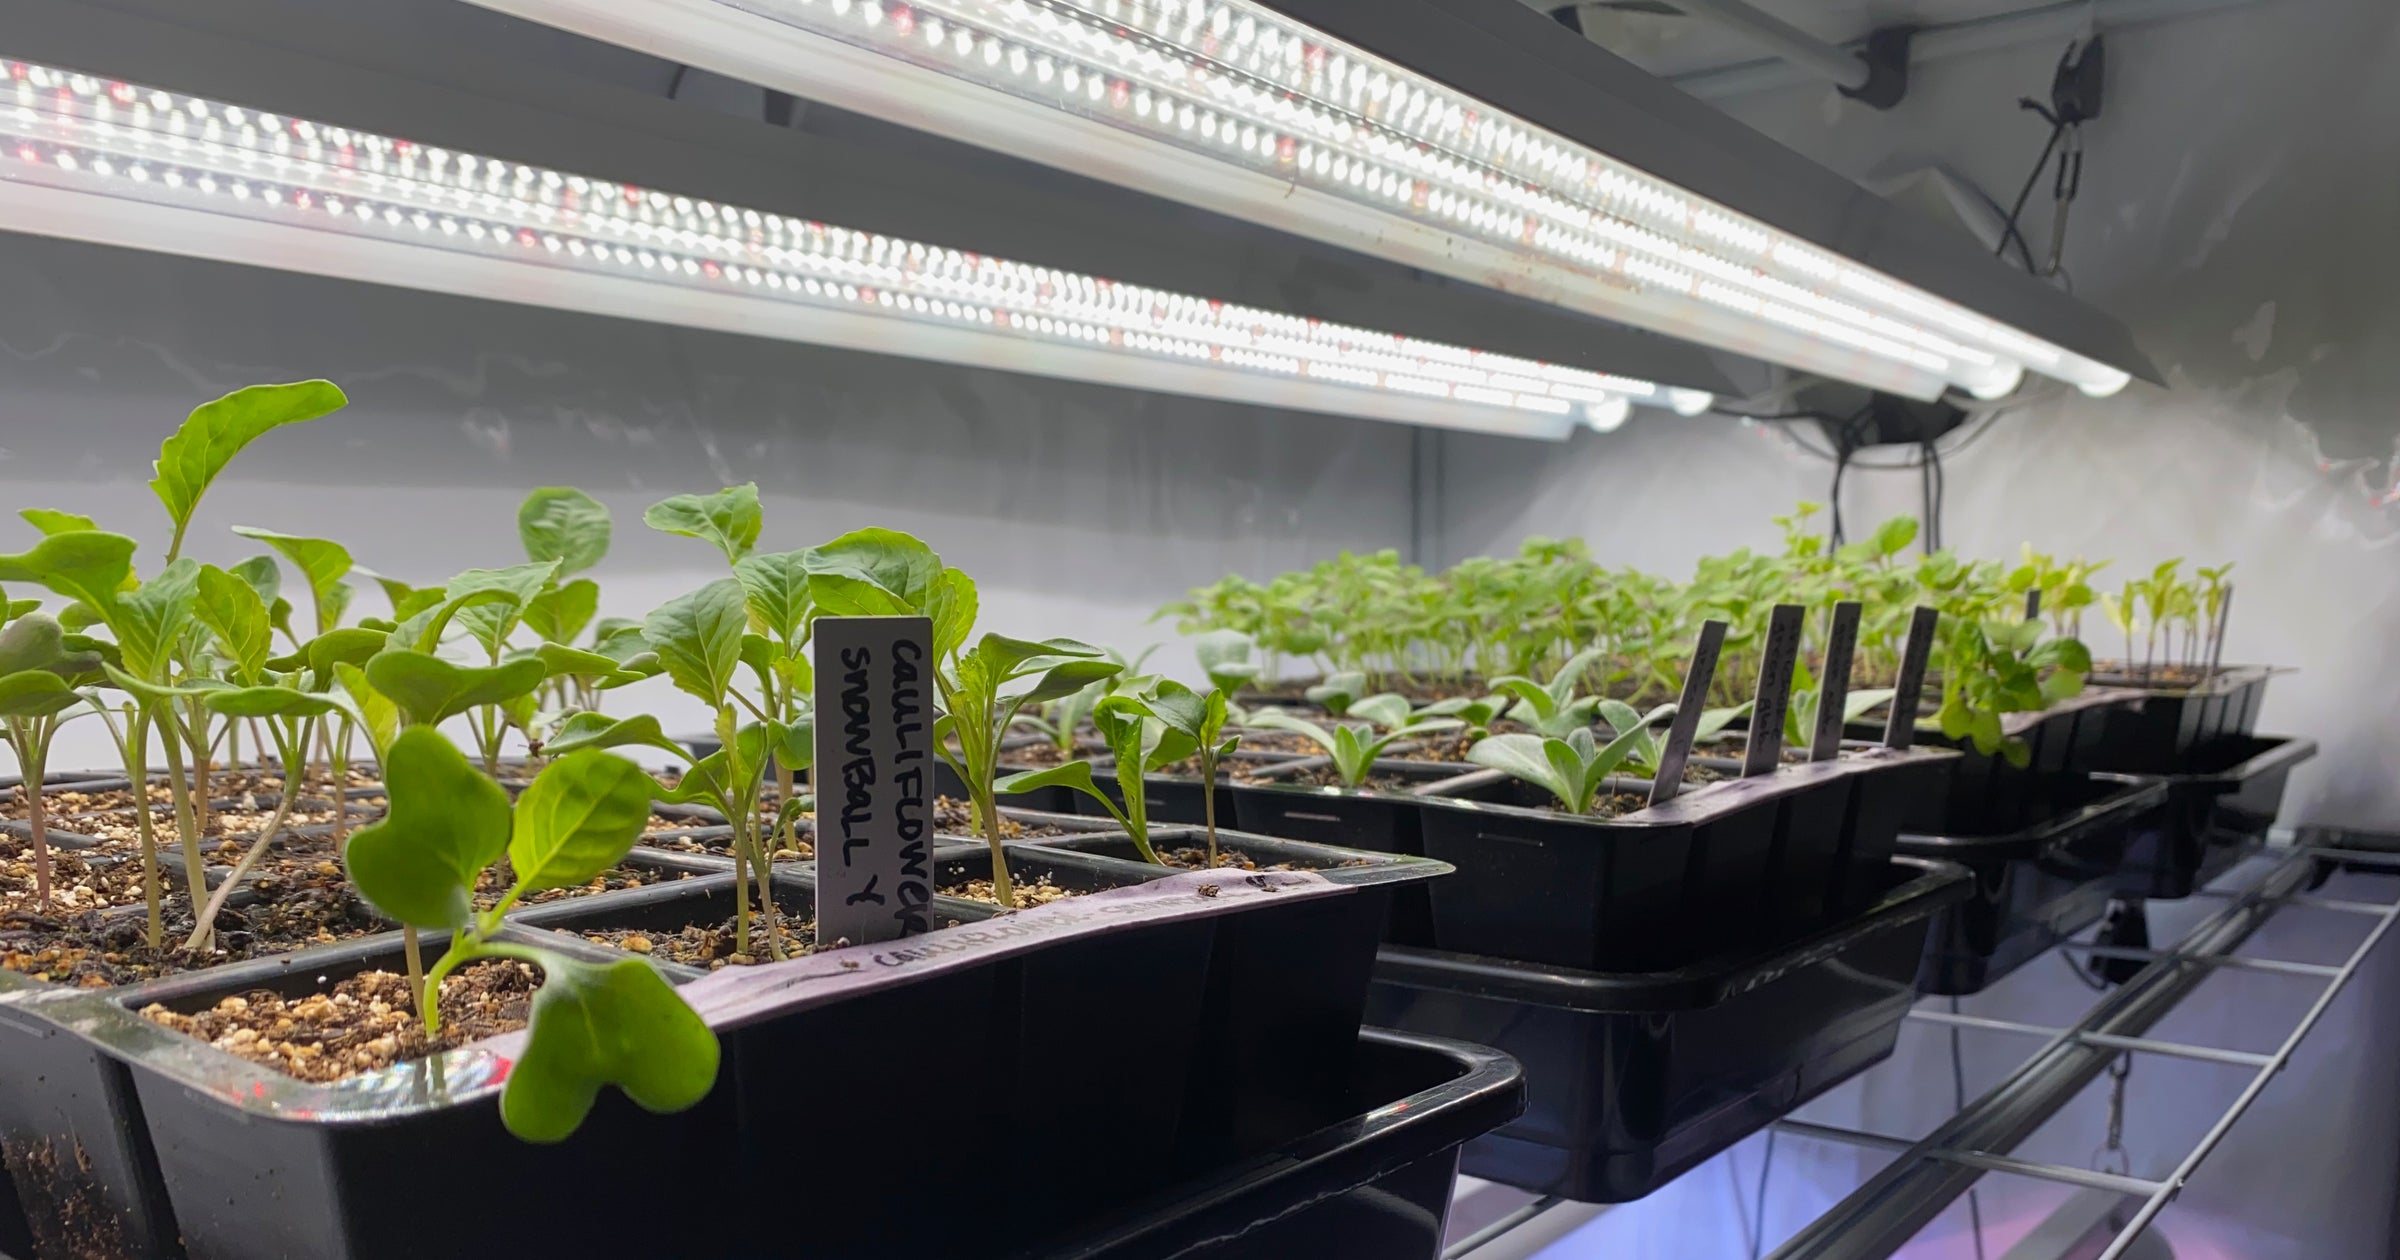 Formode Utilfreds Strømcelle Seeds & Starts 3-Tier Walden White LED Grow Tent Kit – Active Grow